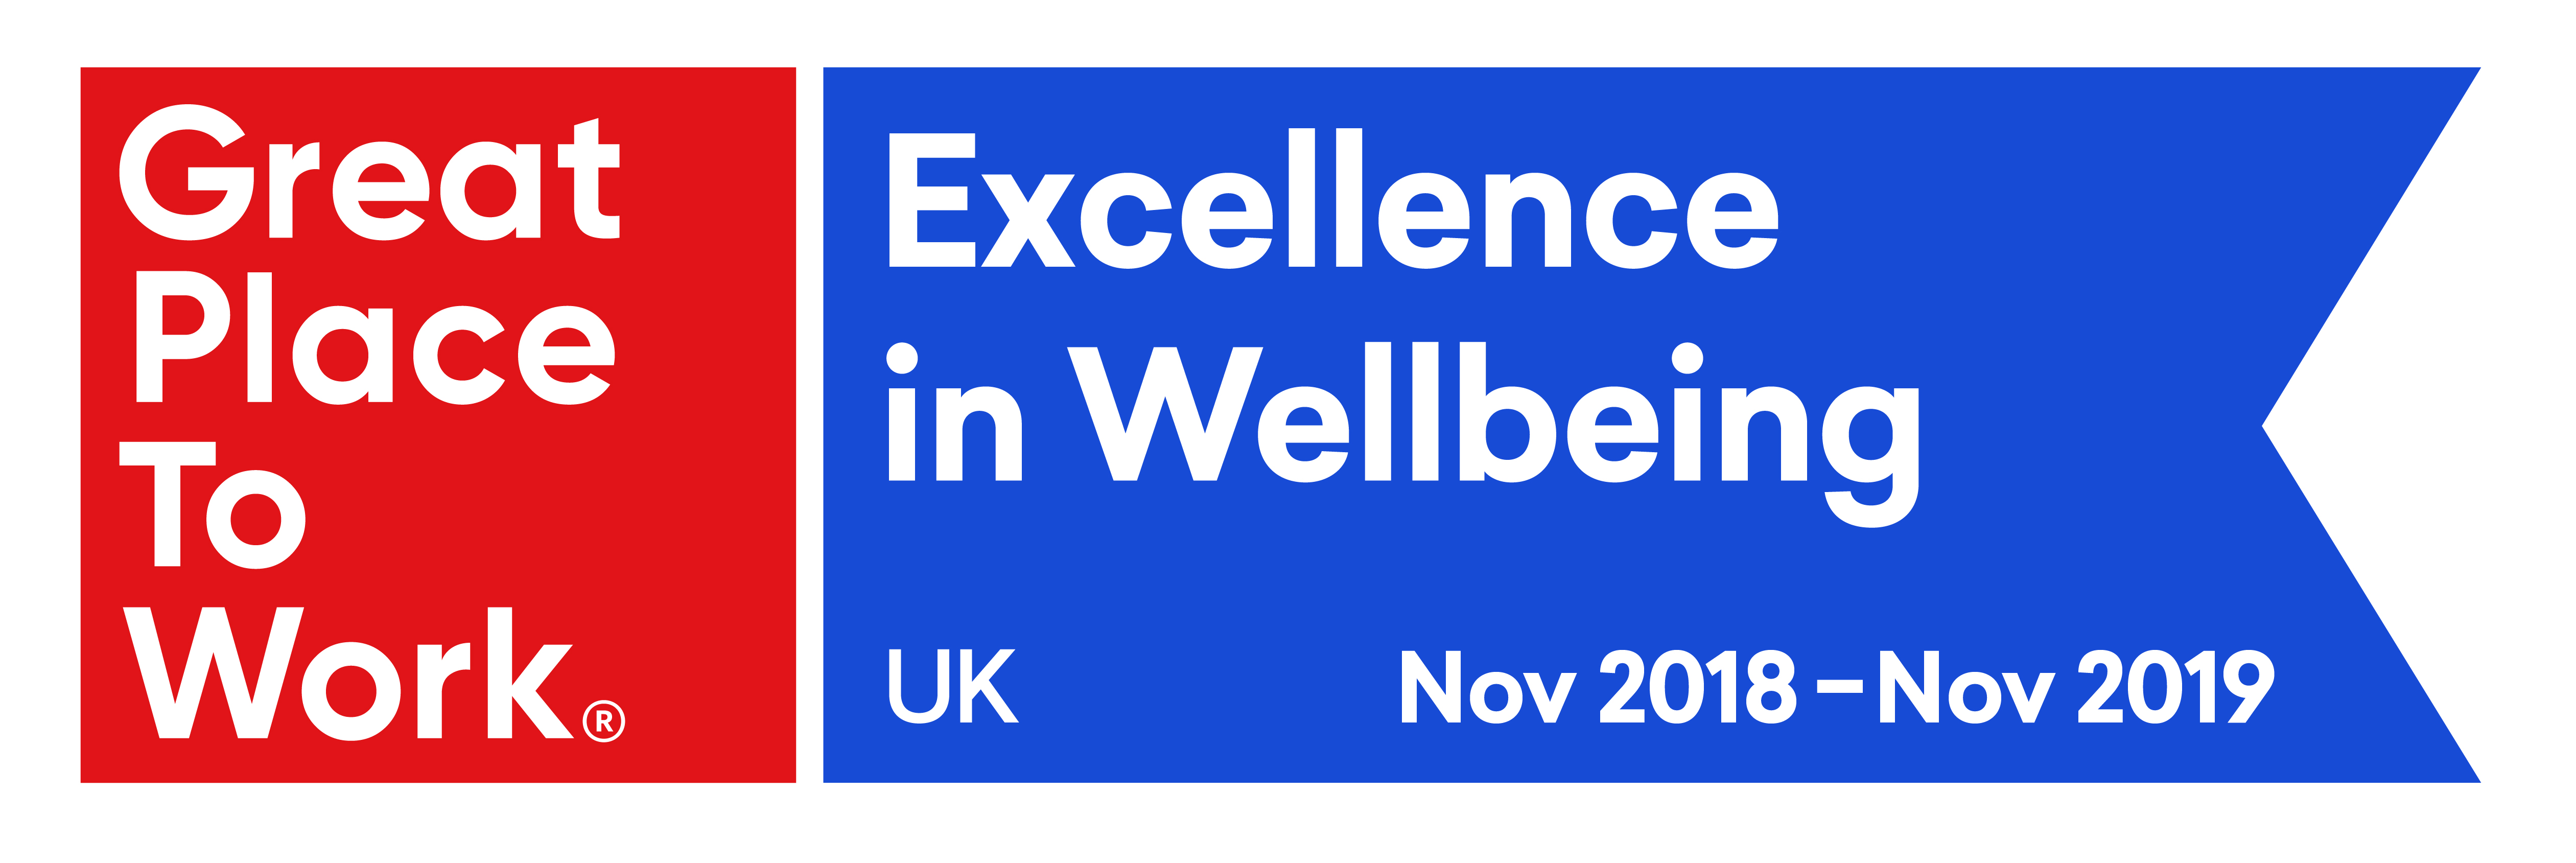 GPTW-Excellence-in-Wellbeing-RGB Nov-2018-Nov-2019